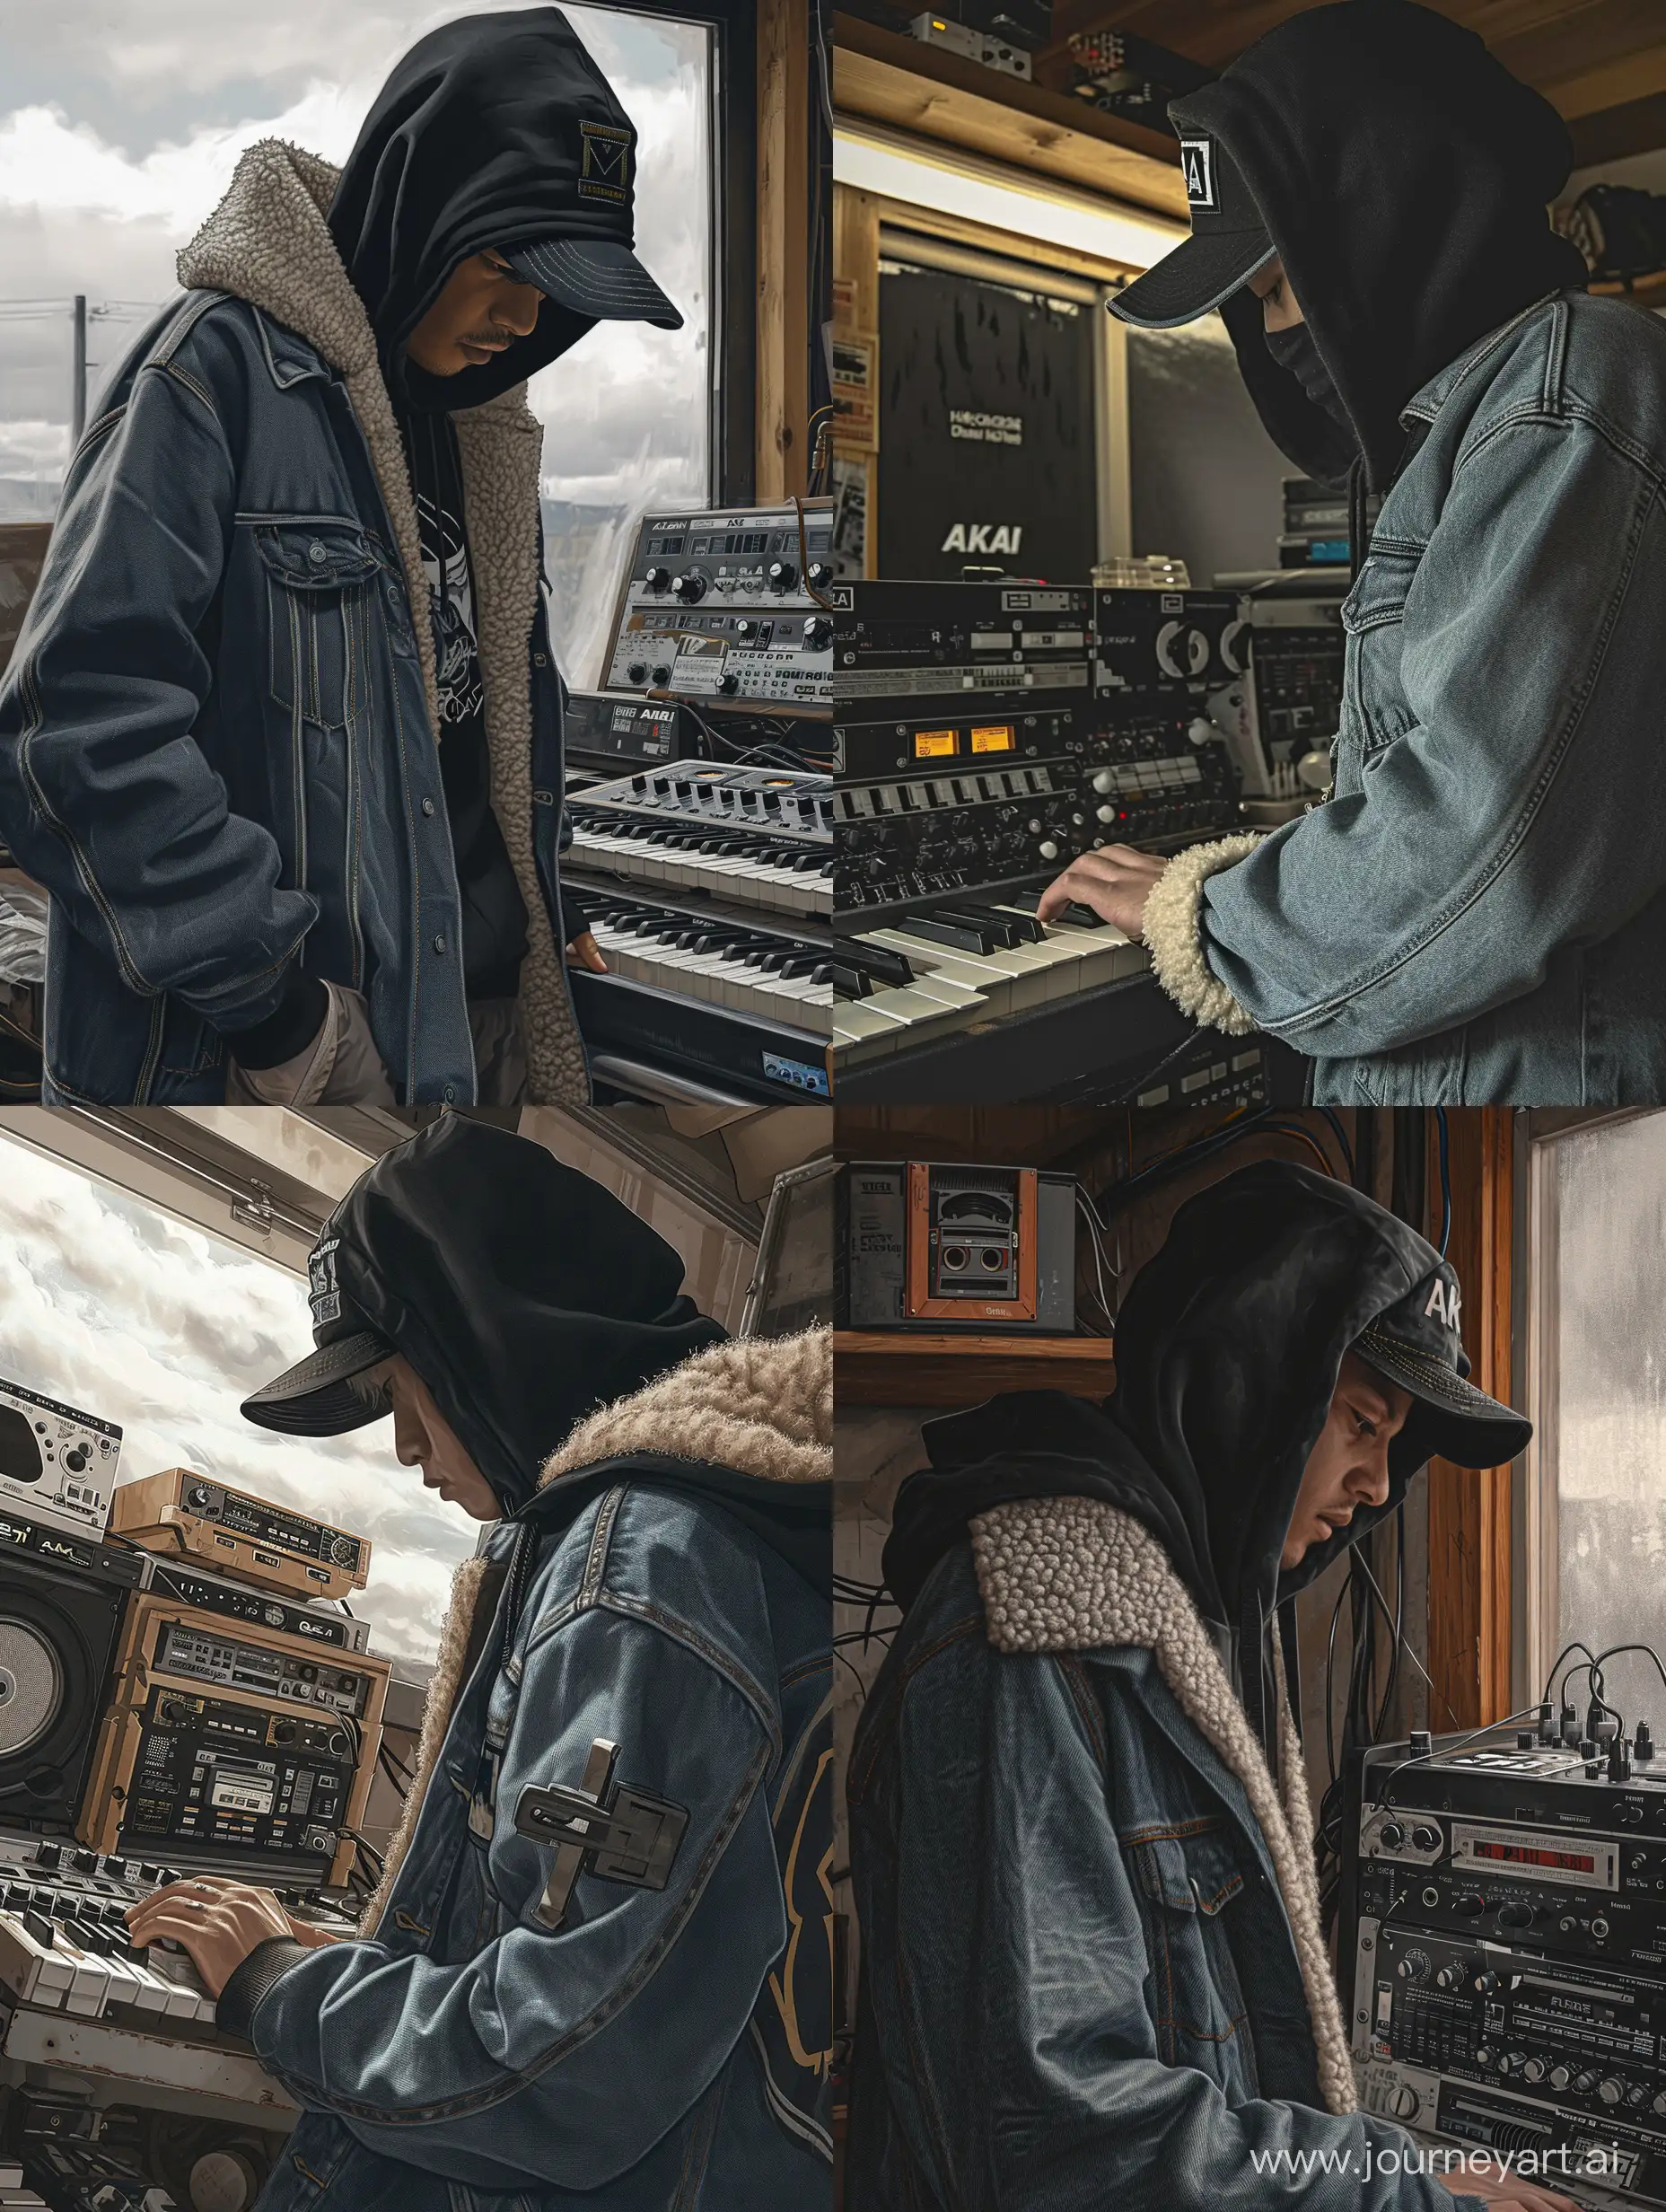 Passionate-HipHop-Music-Production-in-Denim-Studio